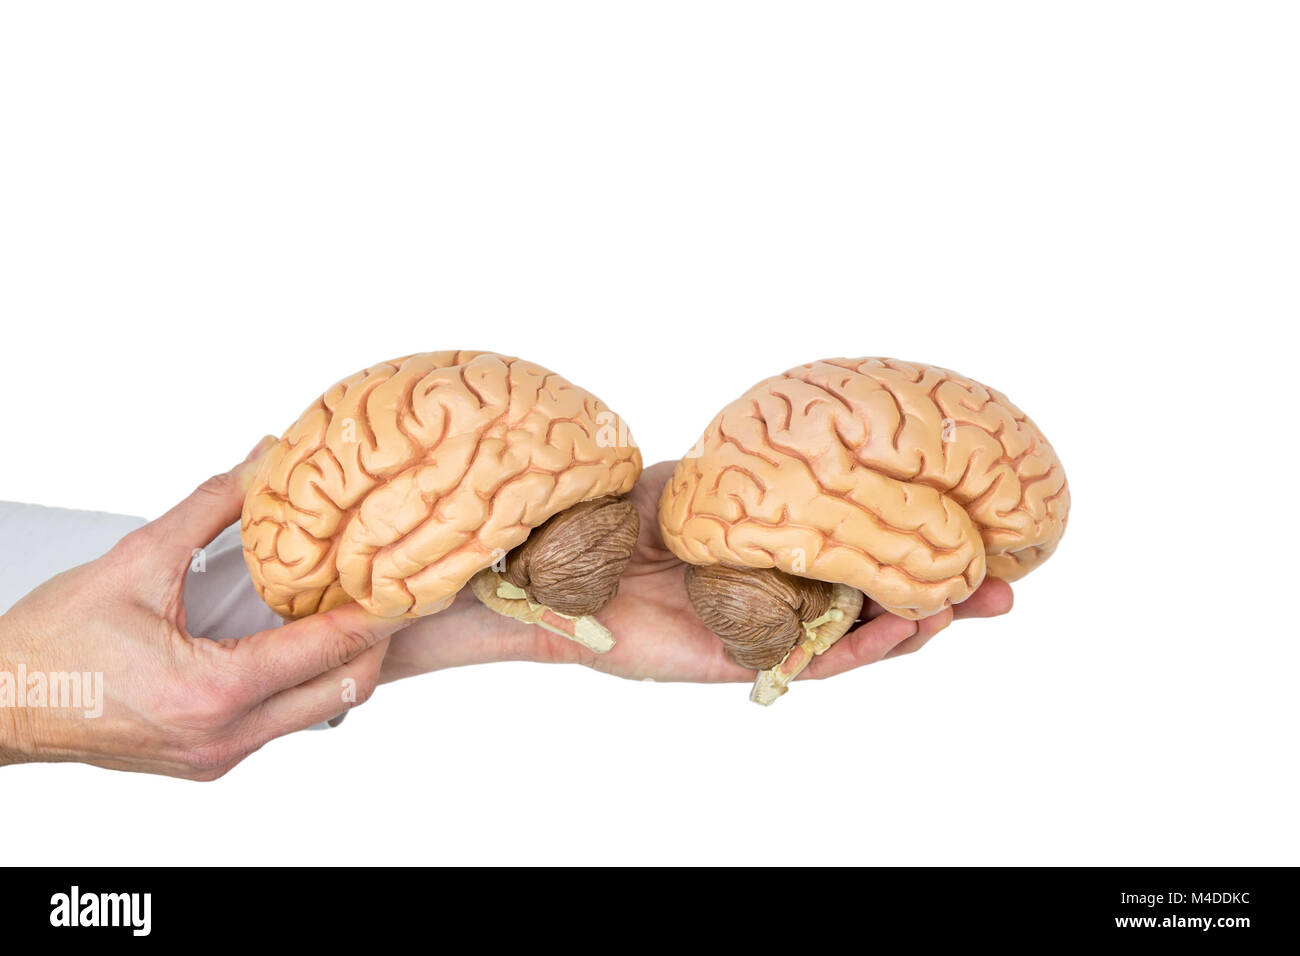 Hands holding model human brain on white background Stock Photo